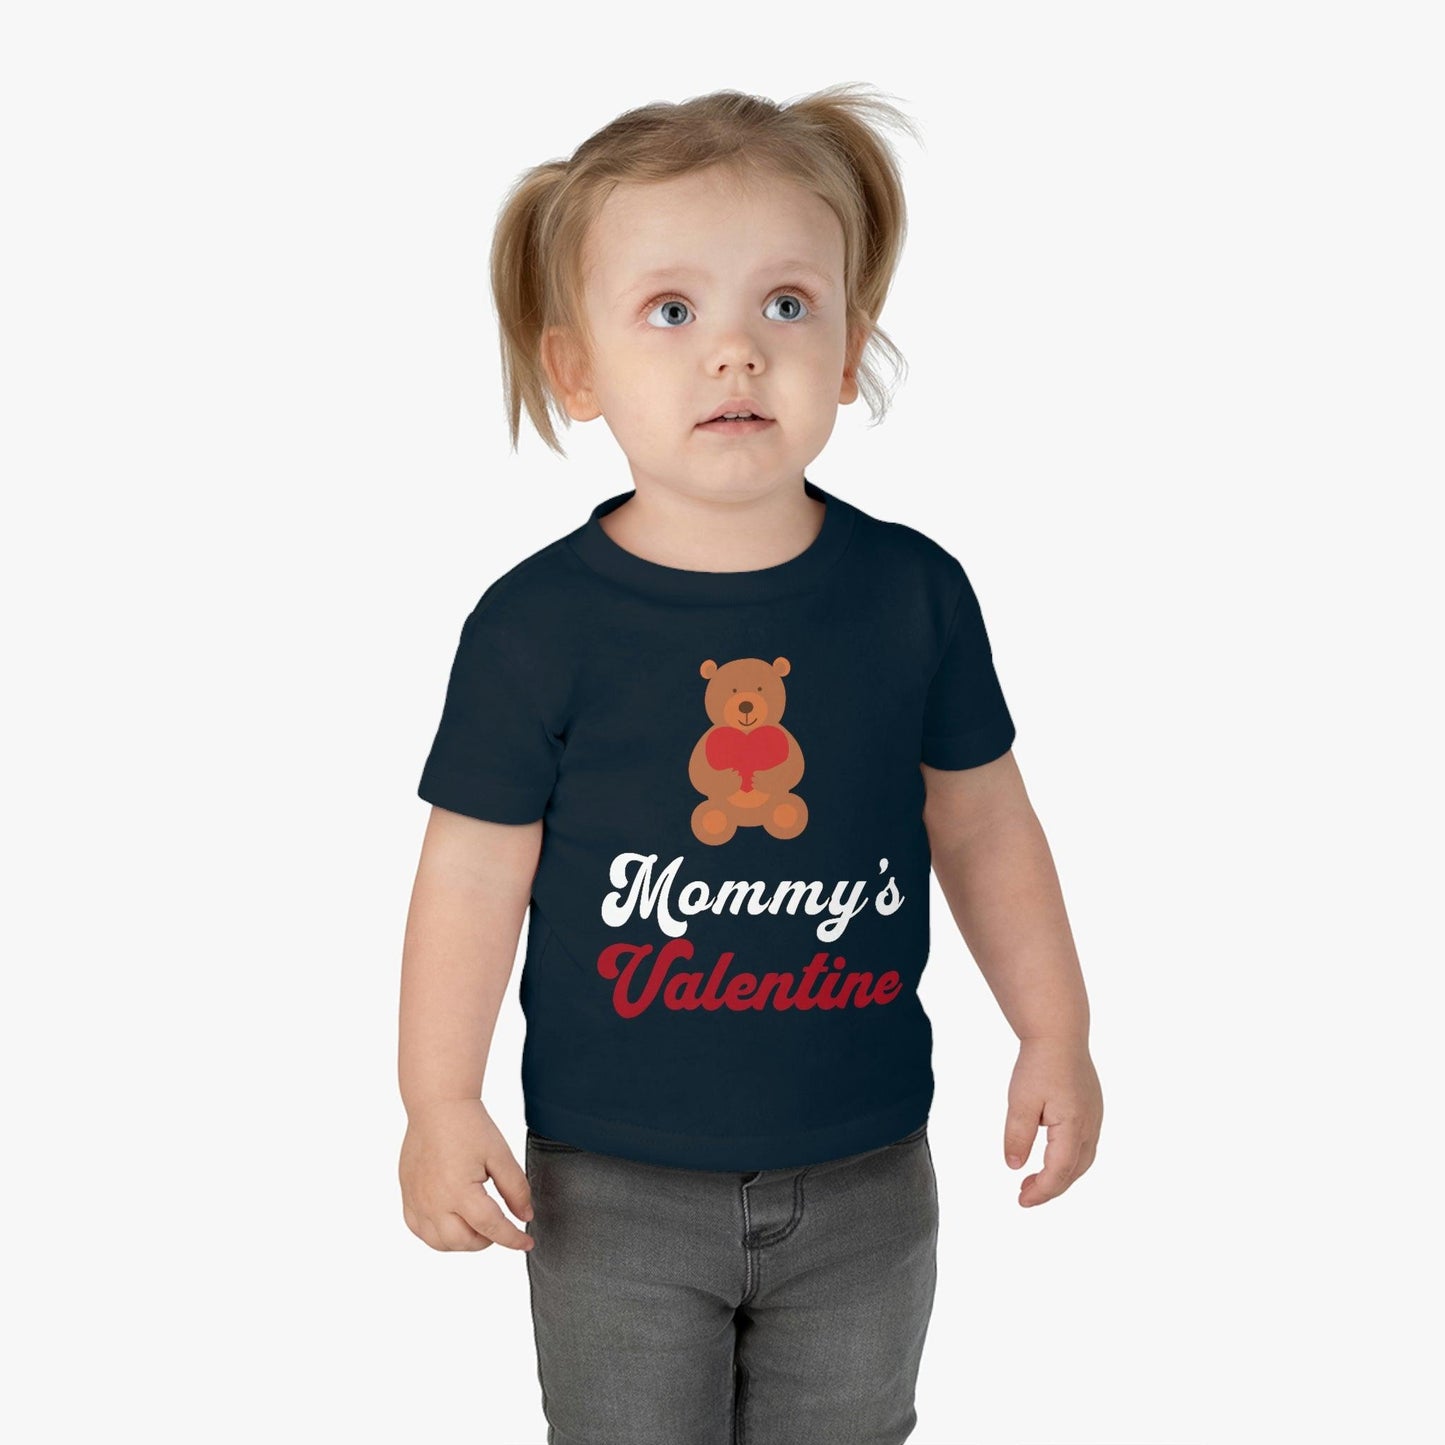 Mommy's Valentine - valentine shirt for kids